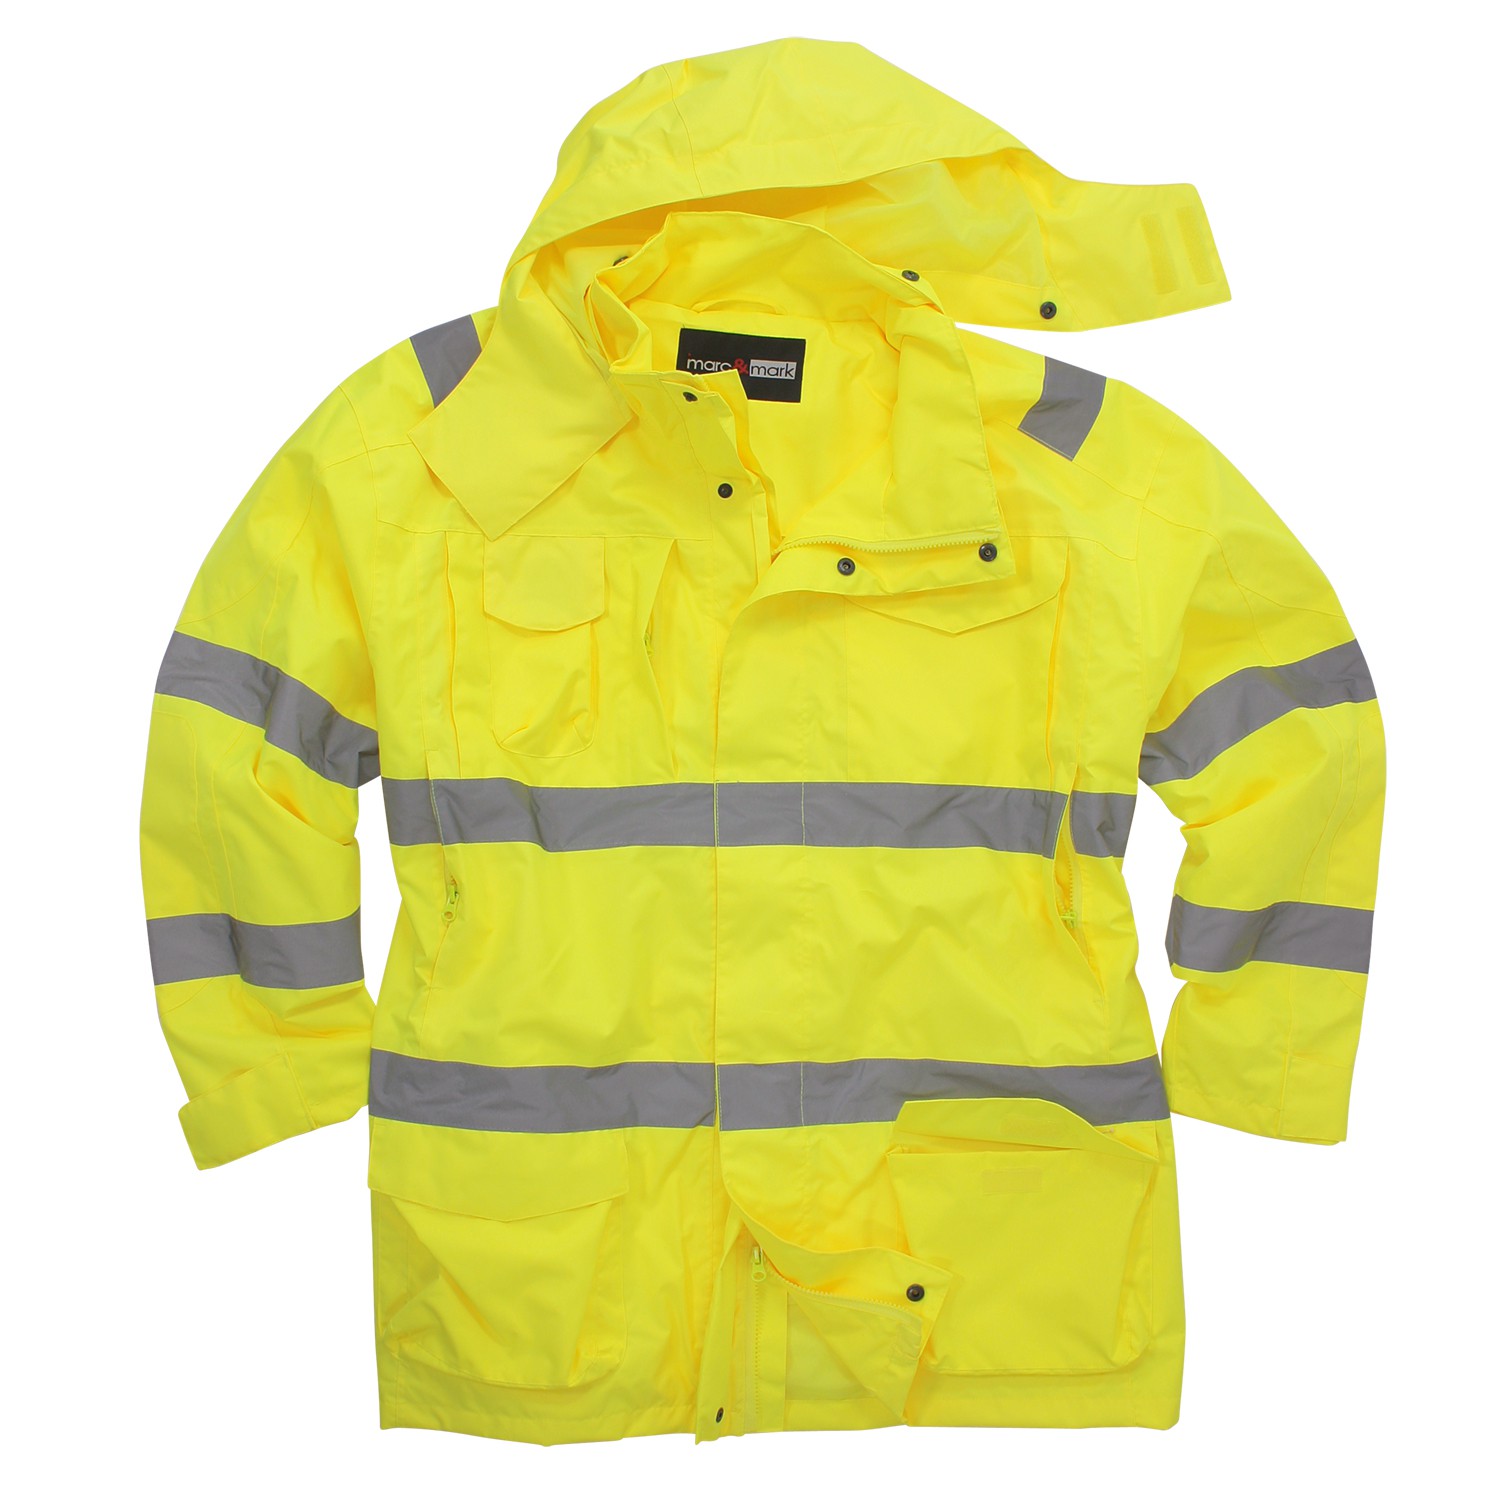 Veste de sécurité imperméable jaune de marc&mark grande taille jusqu'au 10XL